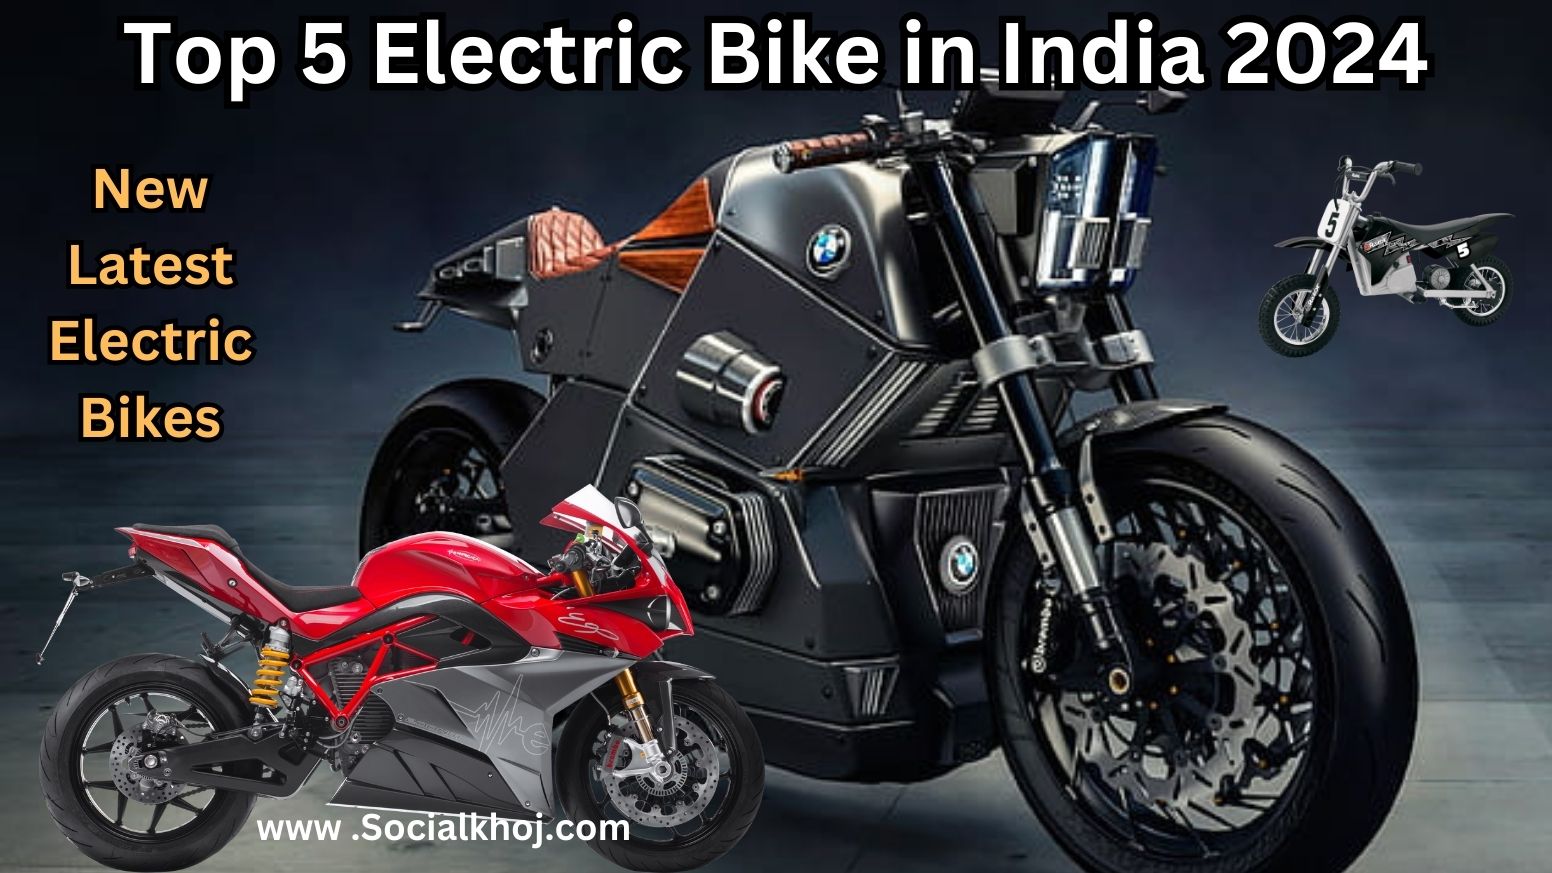 Top 5 Electric Bike in India 2024